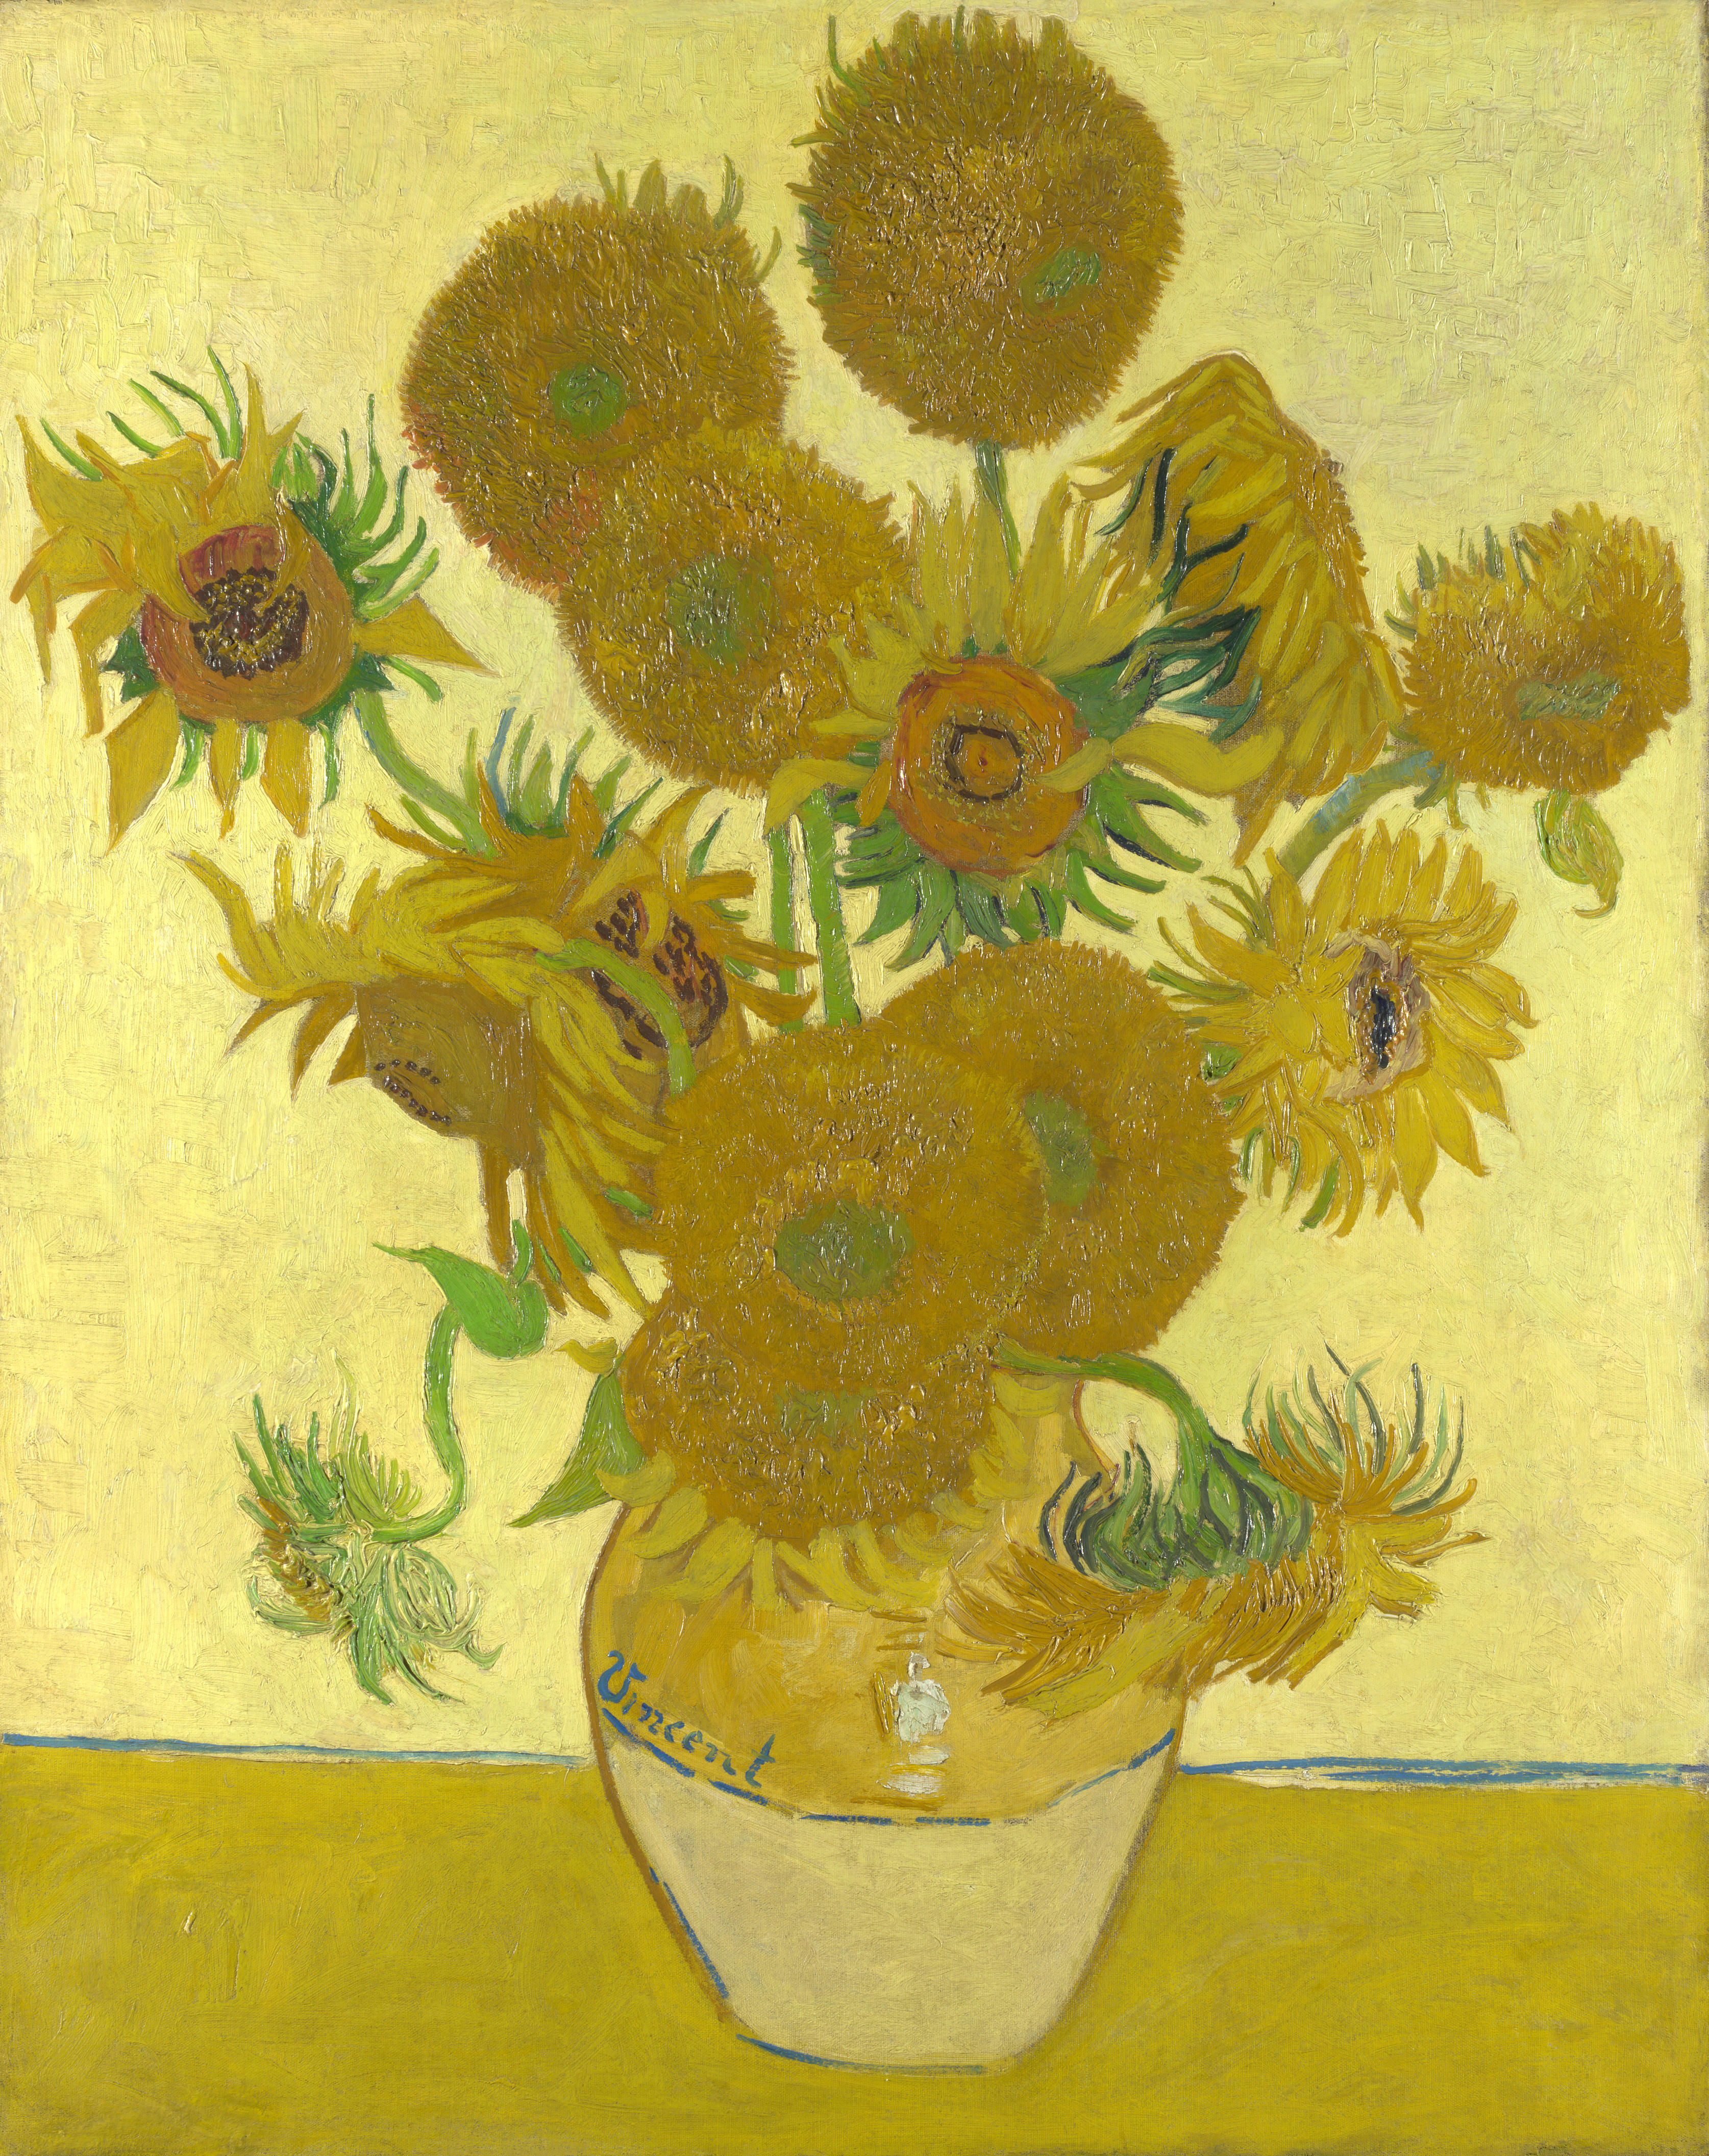 Słoneczniki by Vincent van Gogh - 1888 - 92.1 × 73 cm 